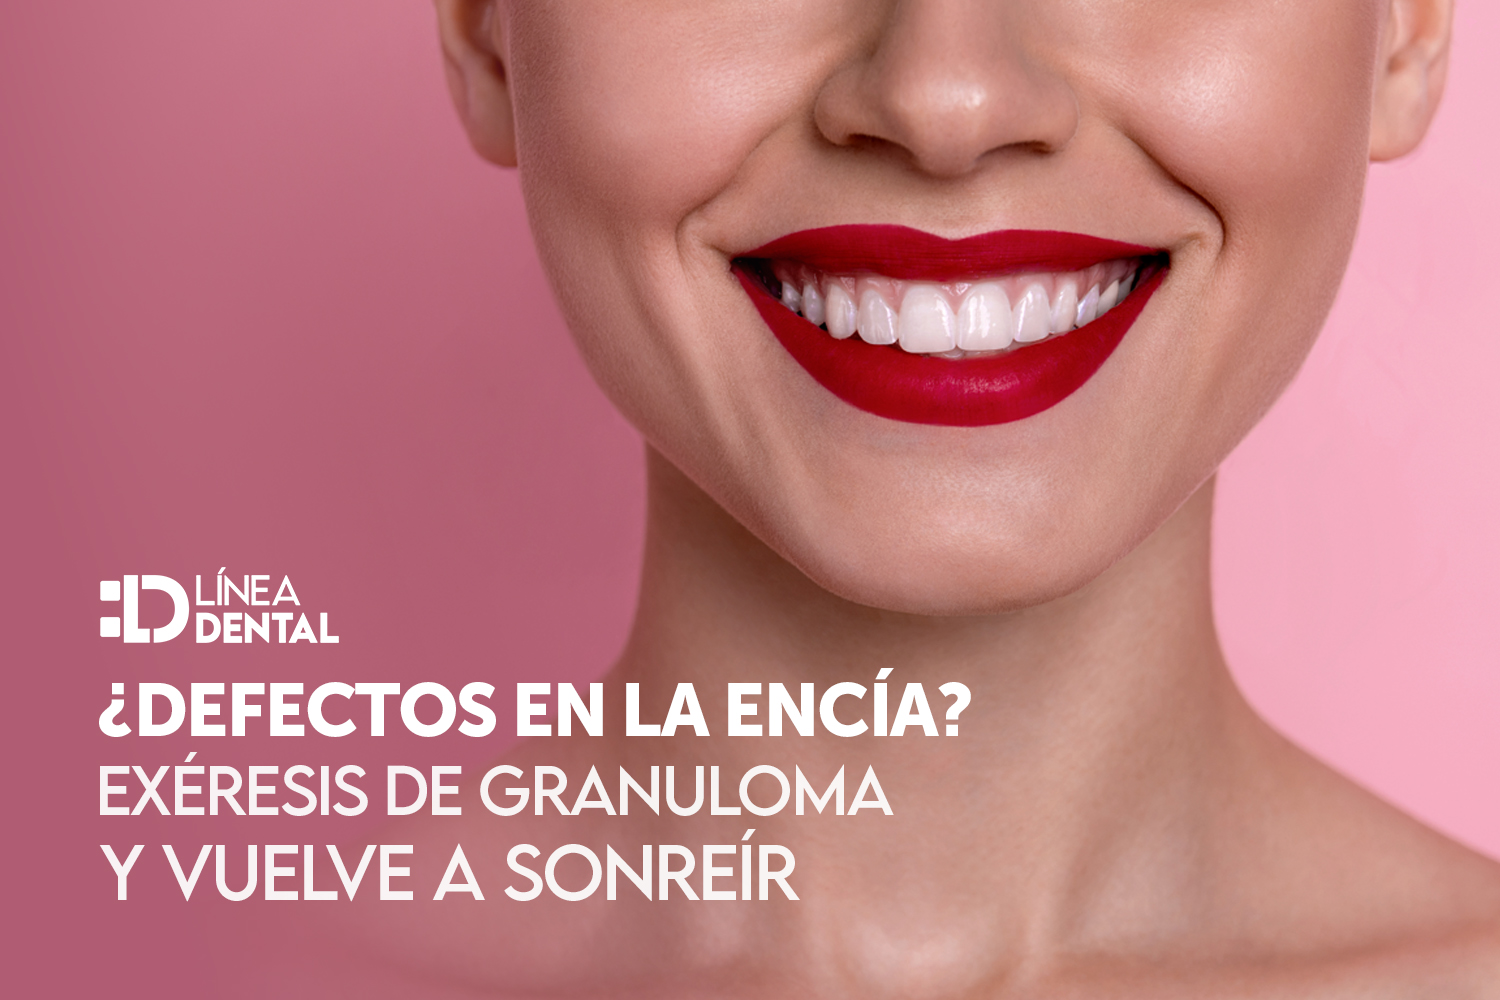 01-exeresis-granuloma-dentista-odontologo-linea-dental-ciudad-real-miguelturra